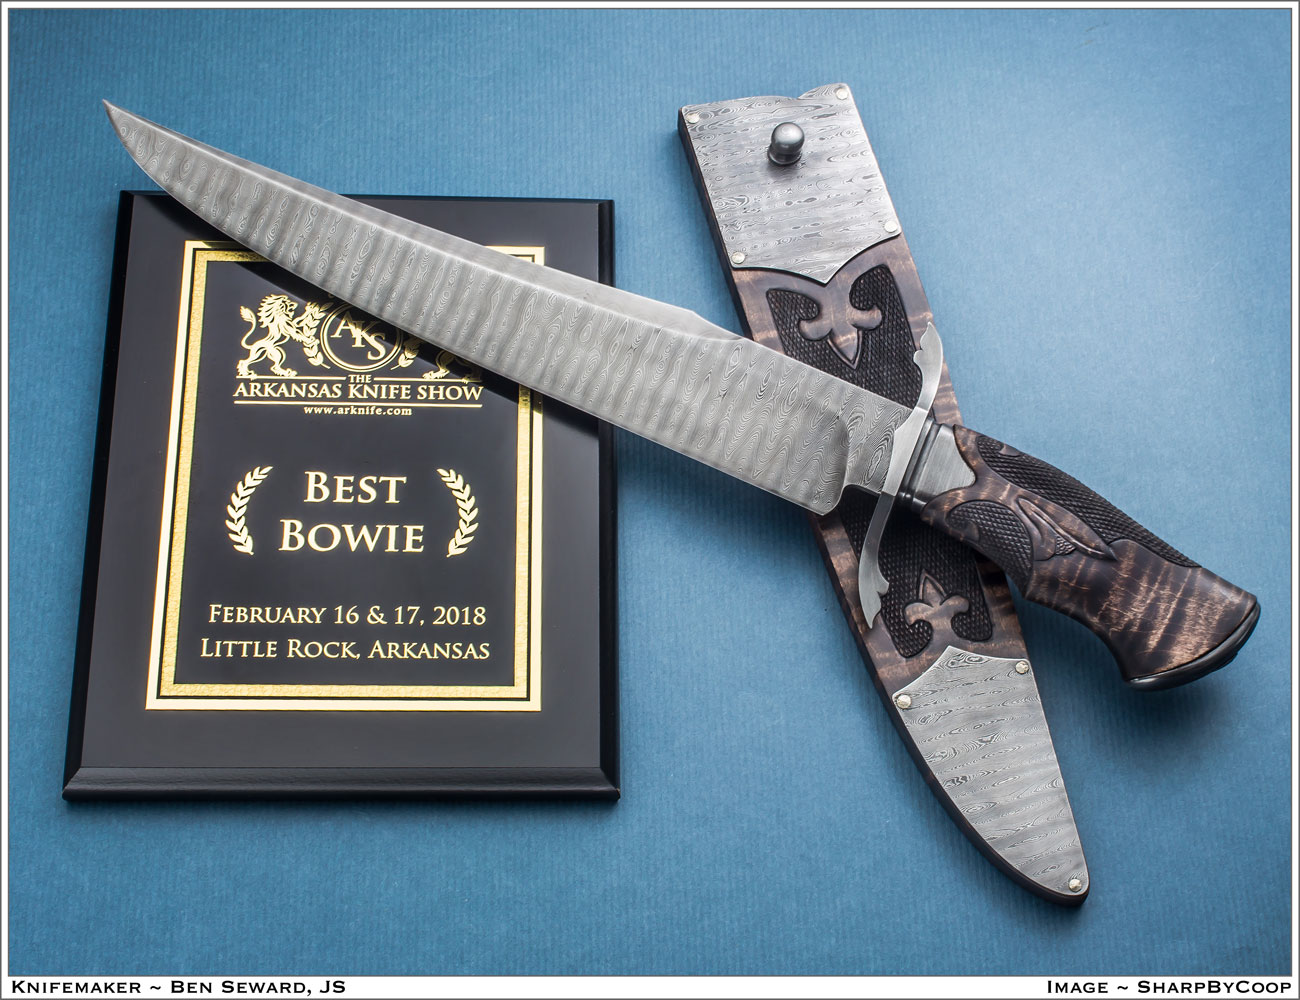 Arkansas Knife Show 2018 award winners